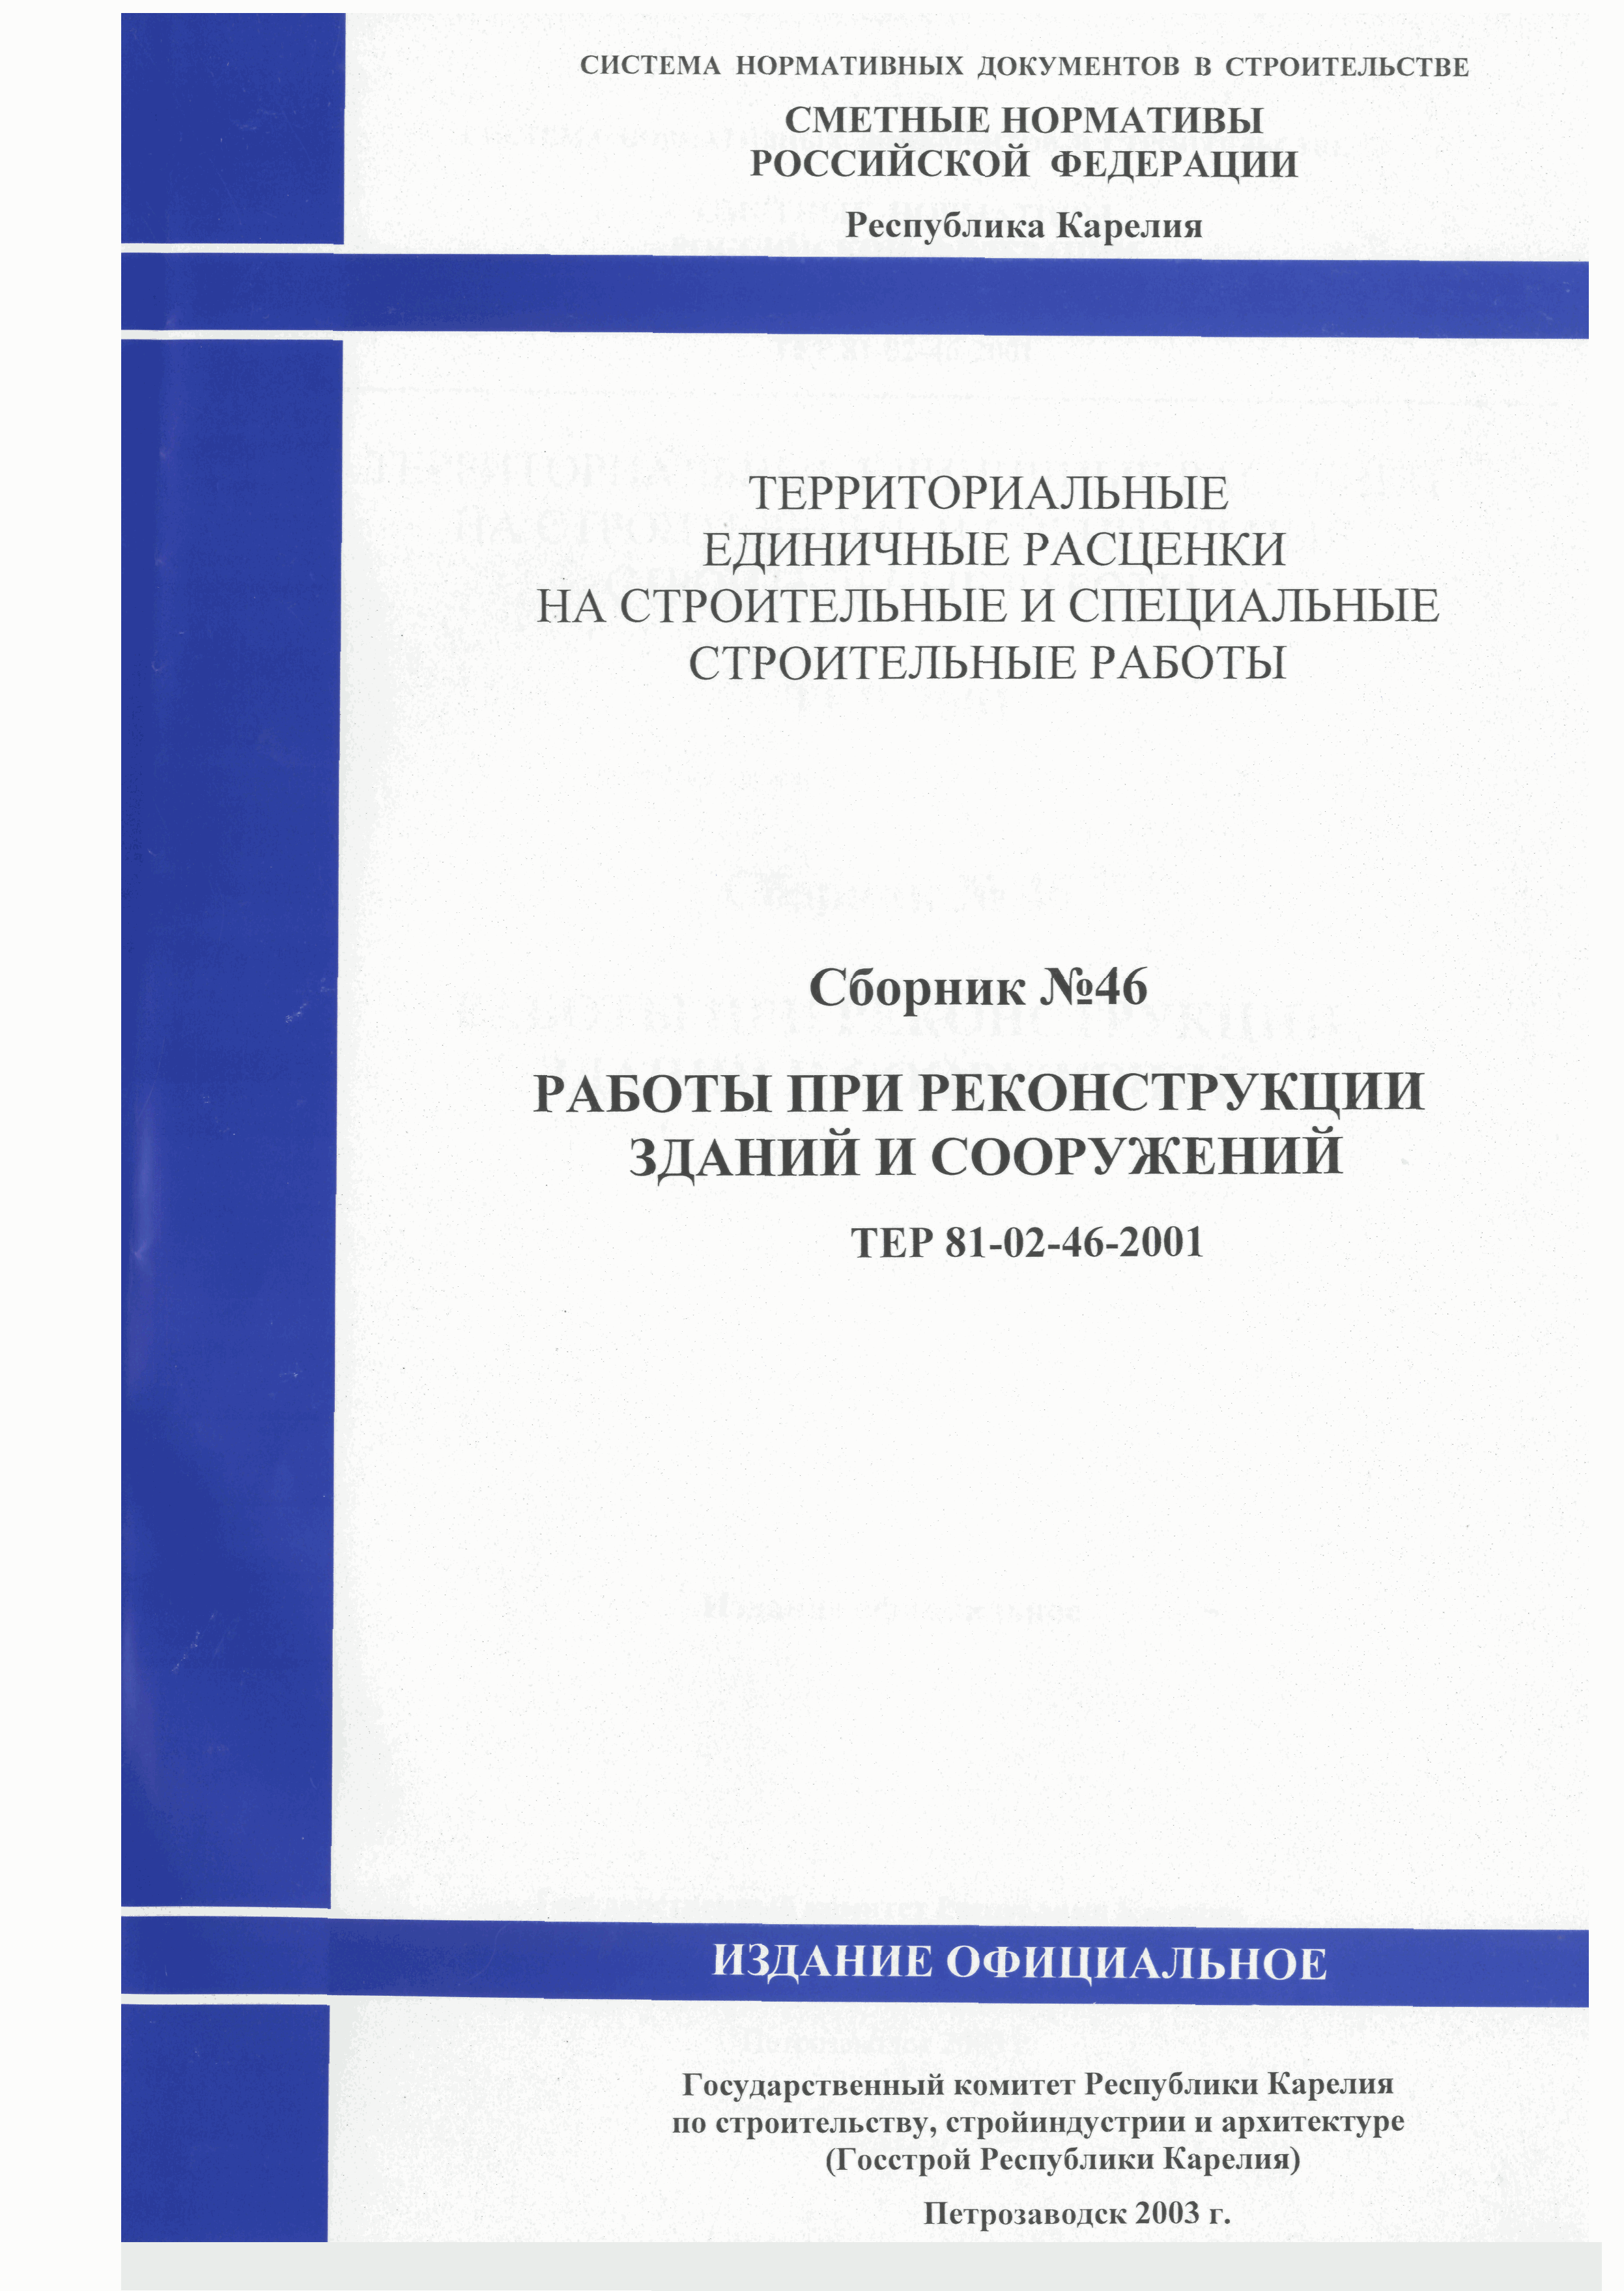 ТЕР Республика Карелия 2001-46